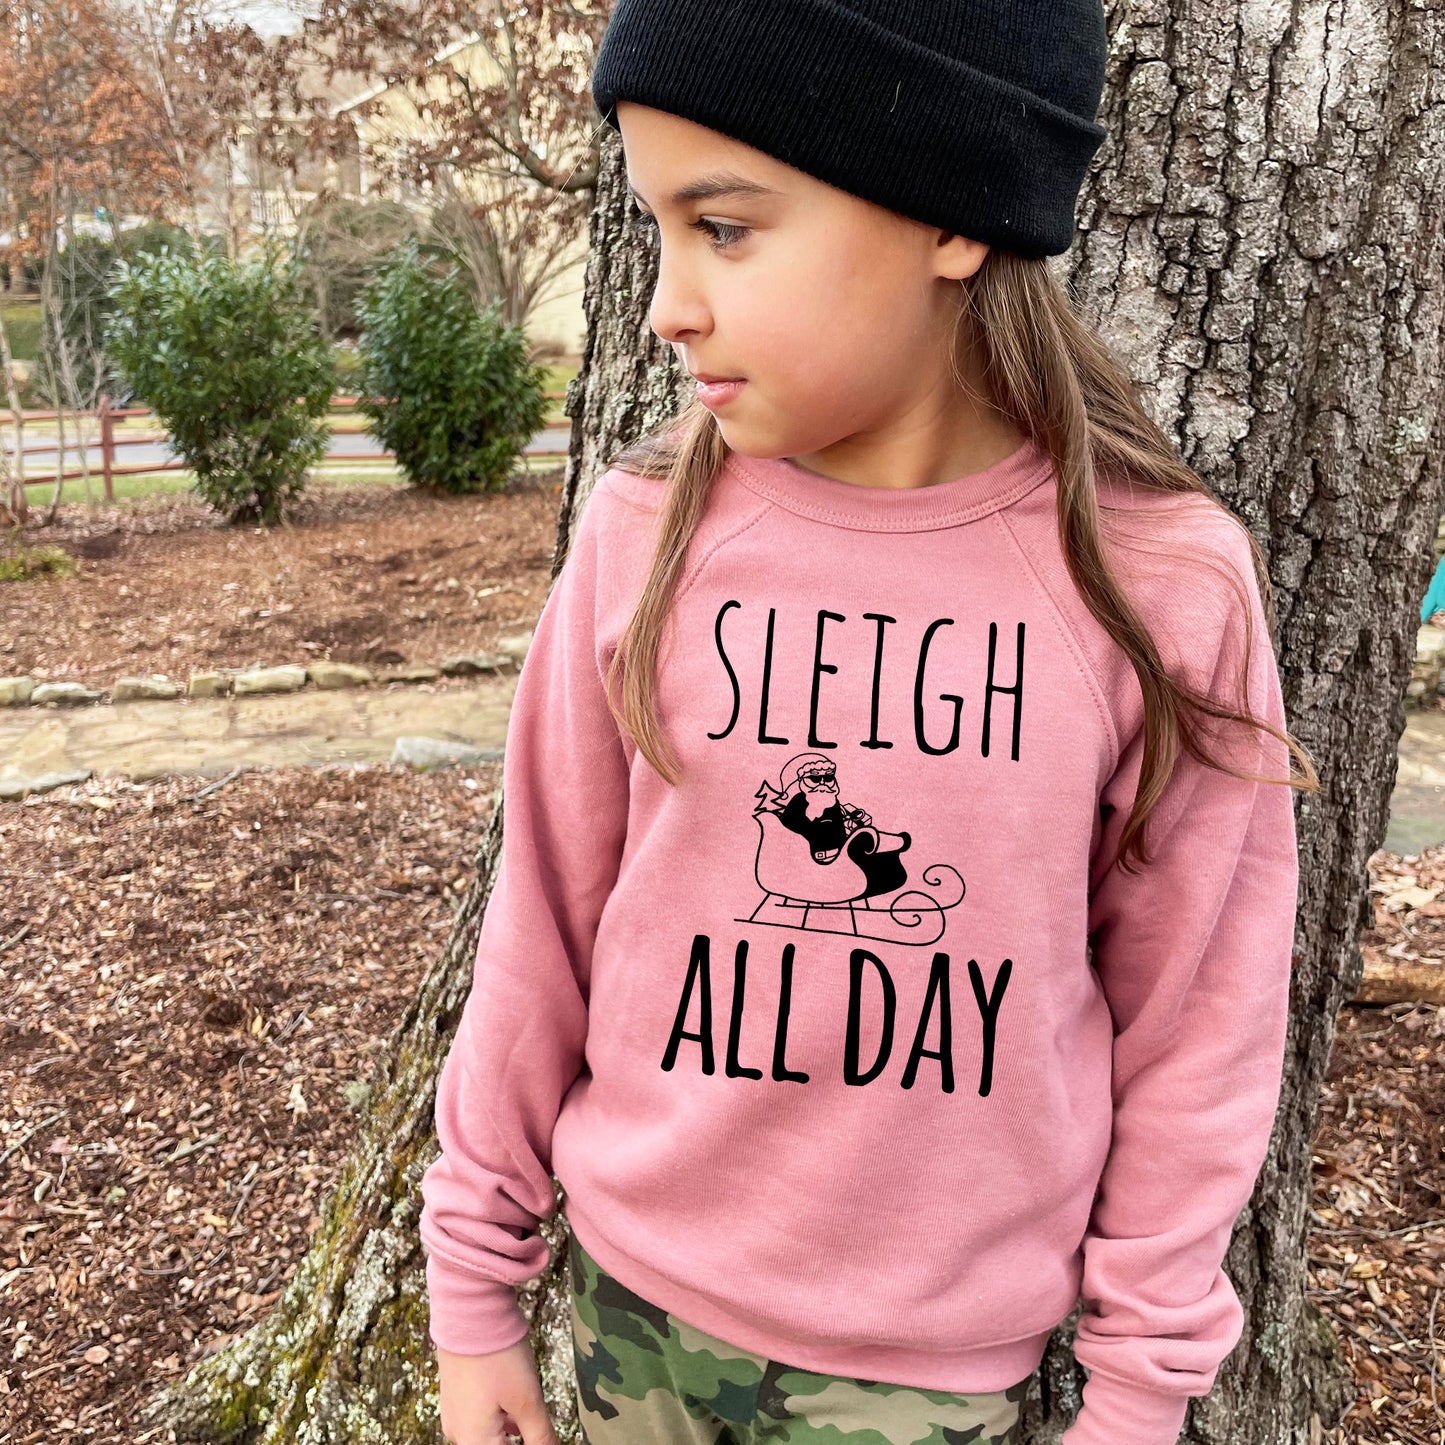 Sleigh All Day - Kid's Sweatshirt - Heather Gray or Mauve